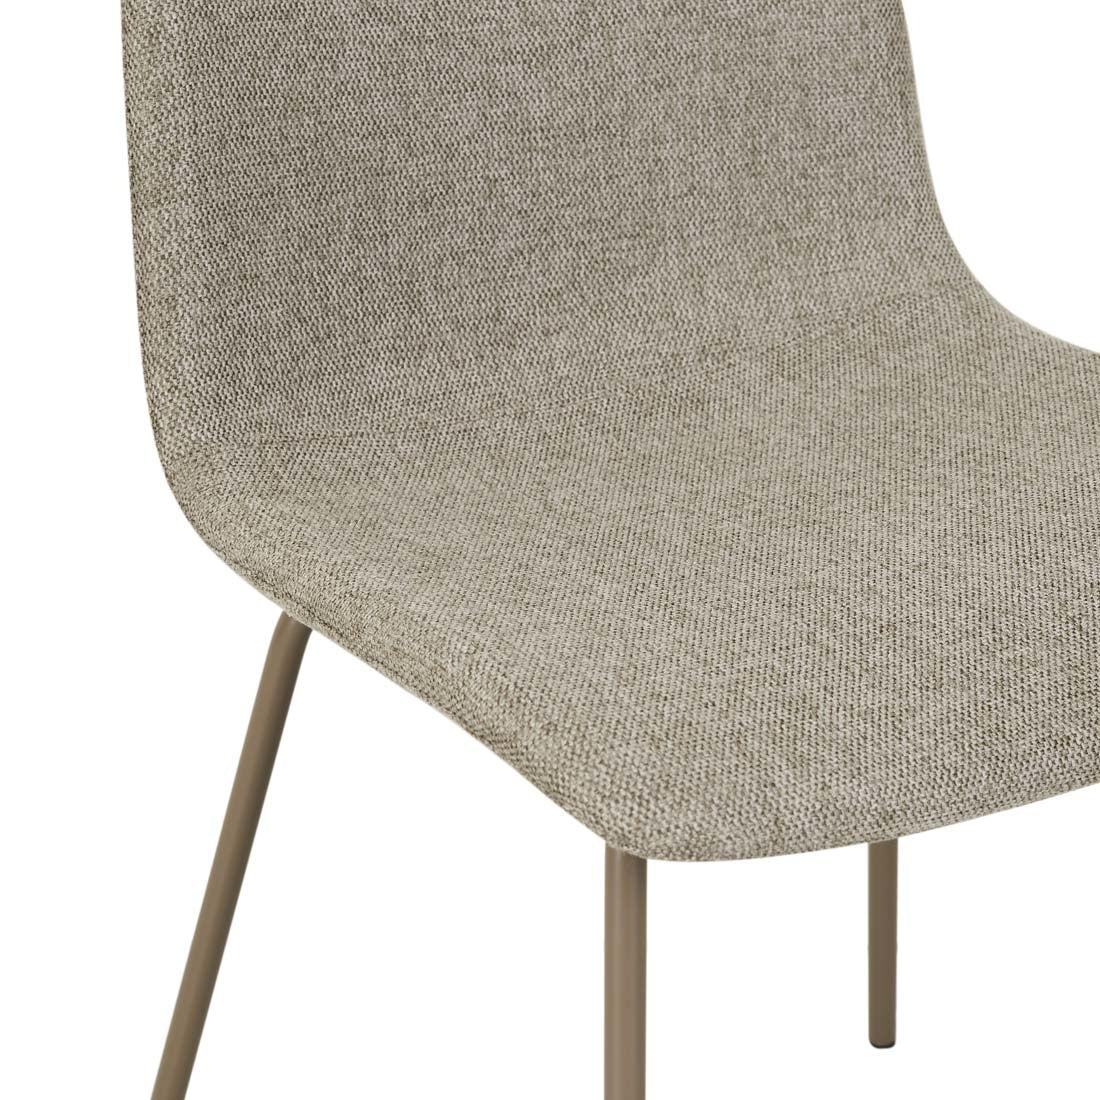 Smith Straight Leg Dining Chair - Khaki Grey